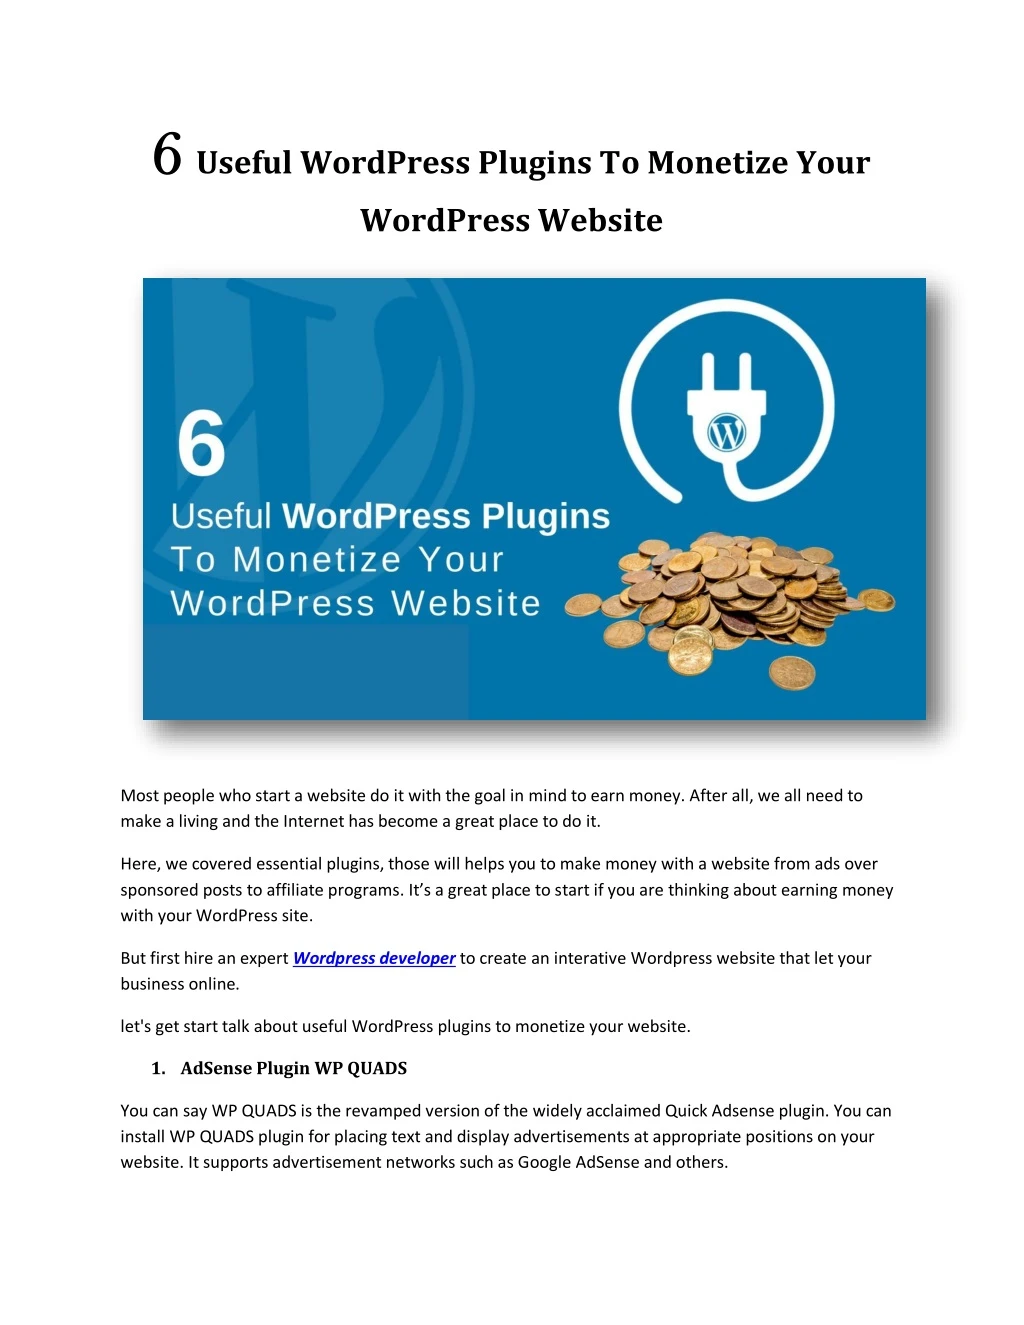 6 6 useful wordpress plugins to monetize your